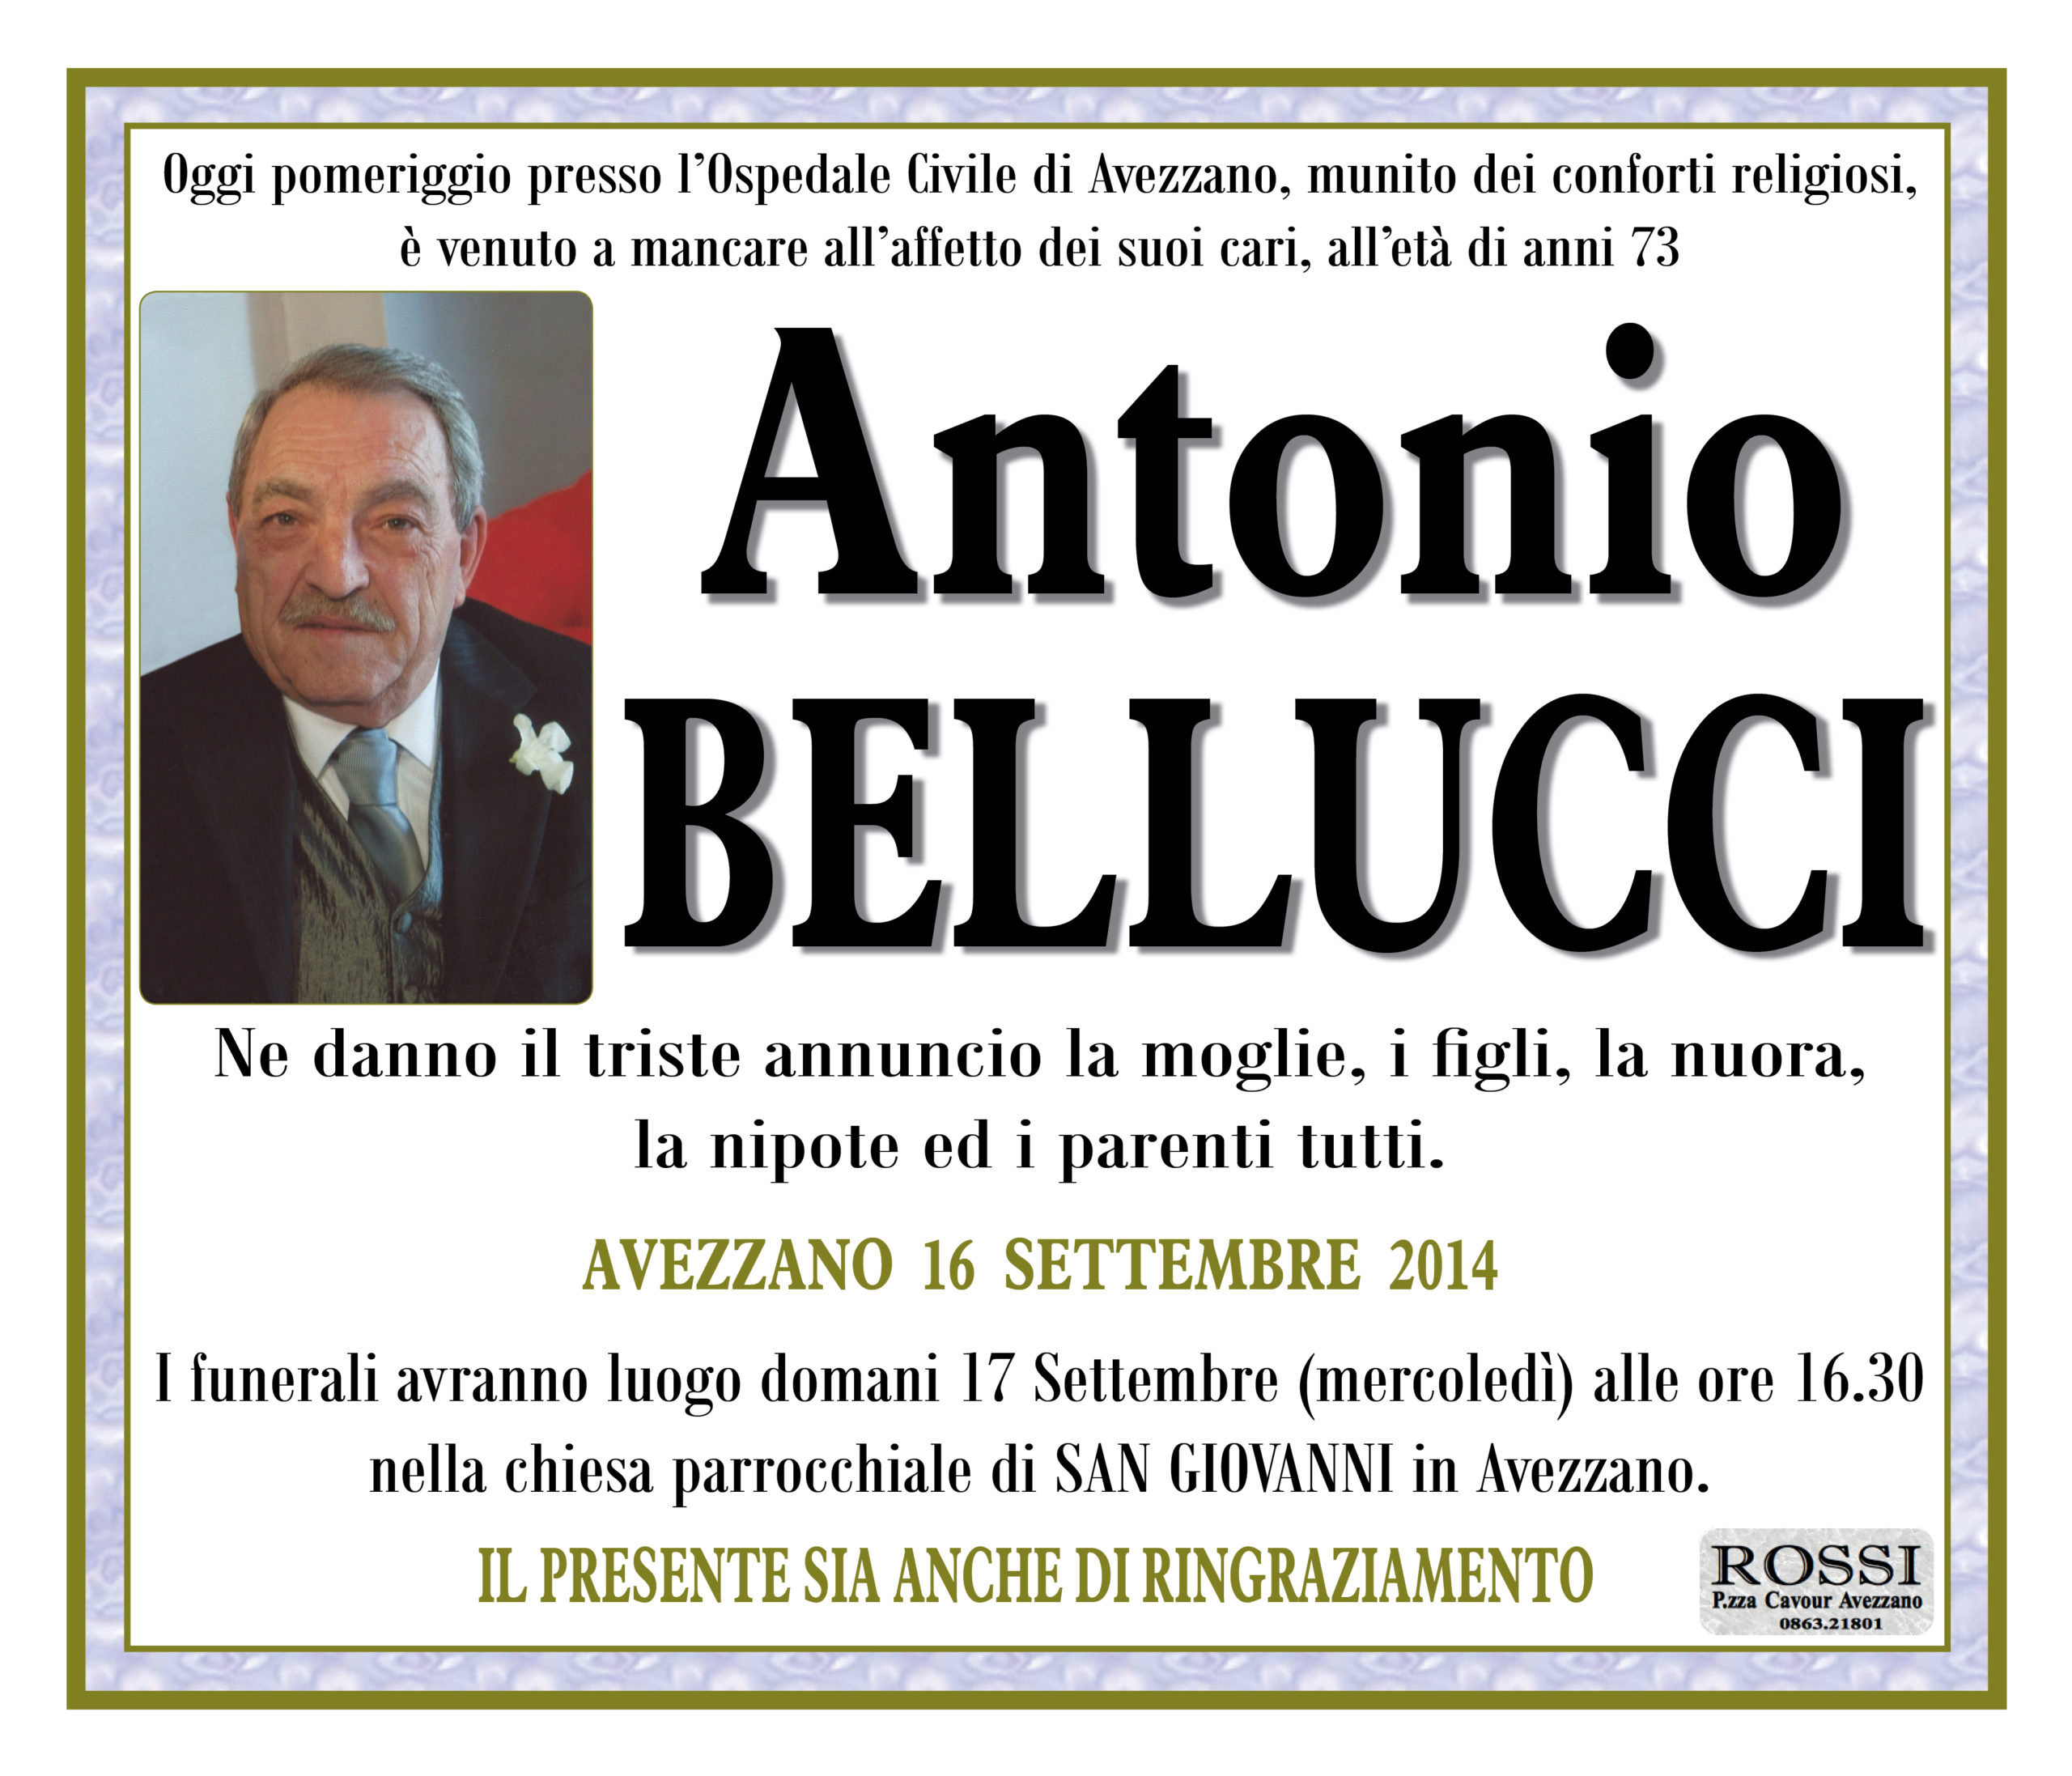 Antonio Bellucci